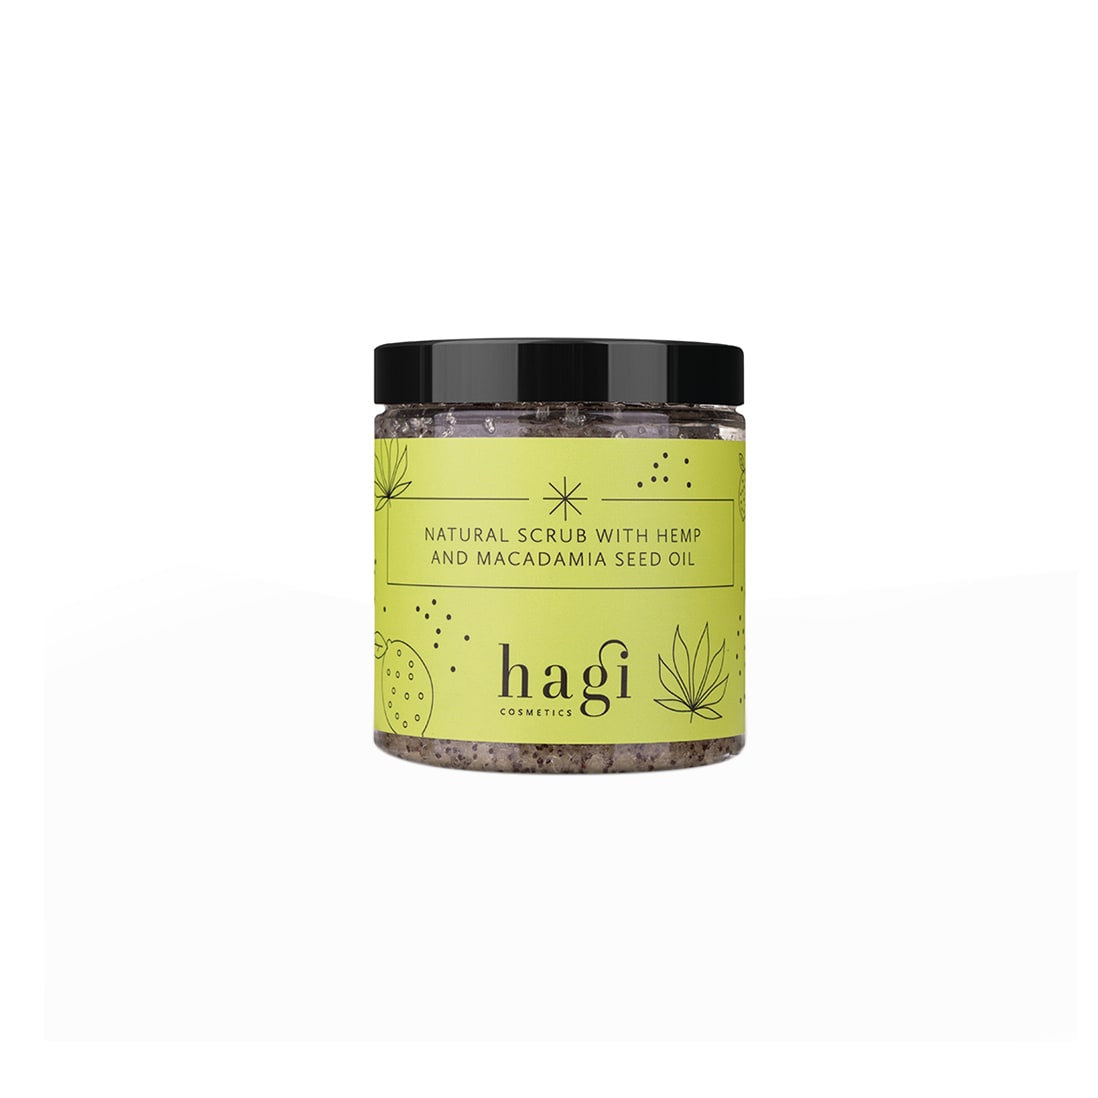 Natural Scrub With Hemp And Macadamia Seed Oil från Hagi